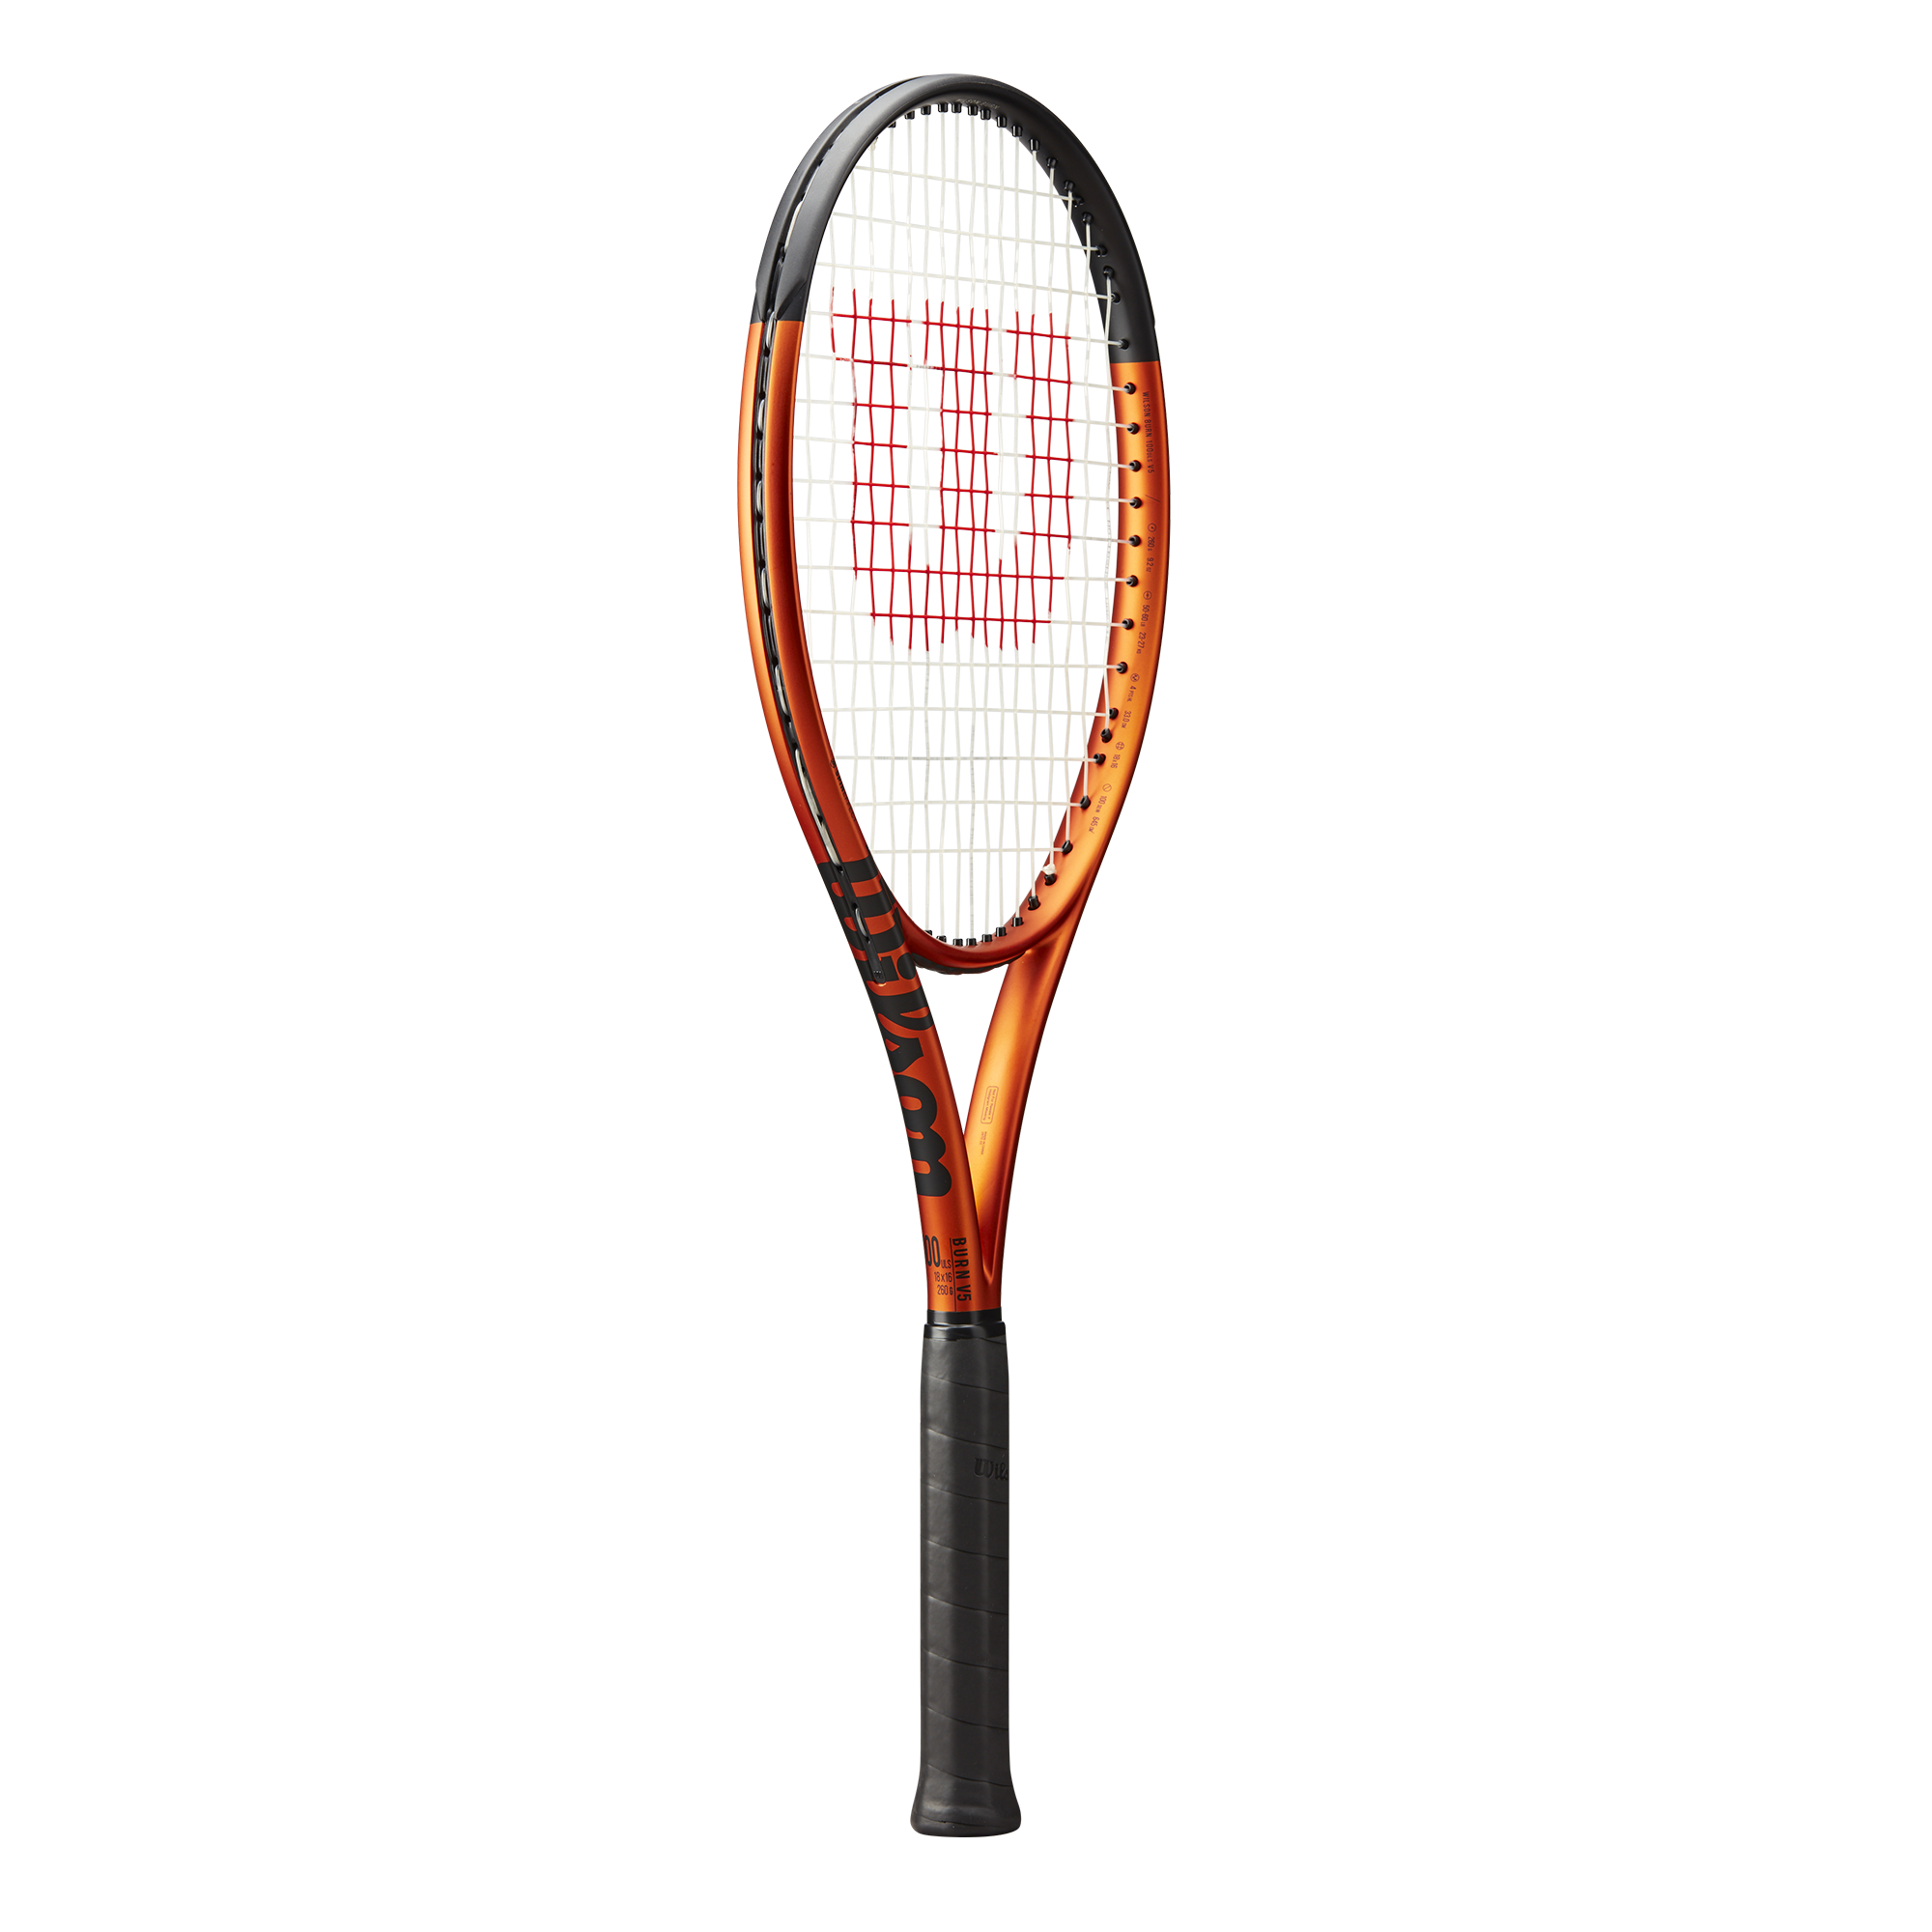 Wilson Burn 100 ULS V5 Tennis Racquet